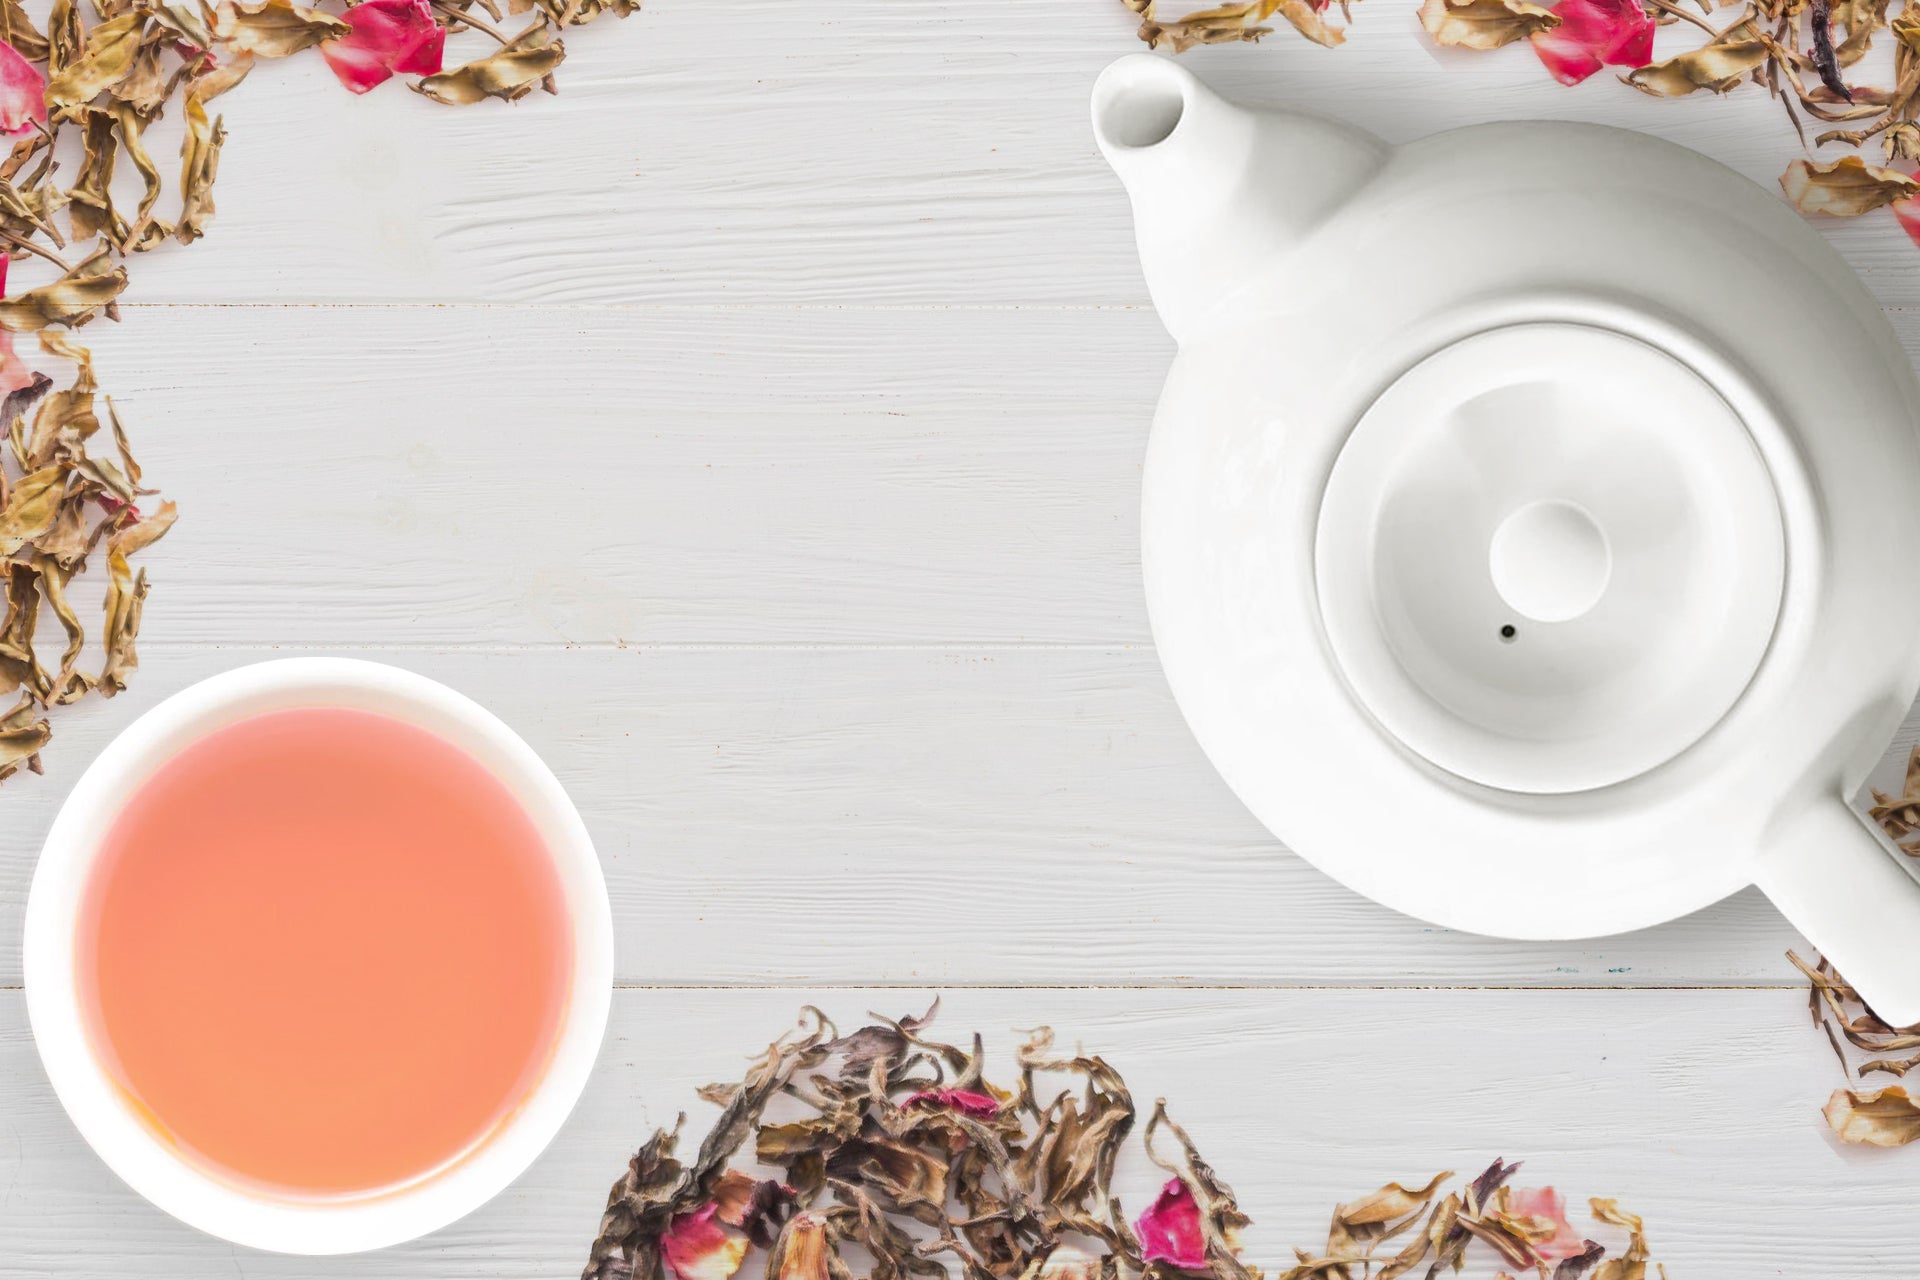 oolong tea health benefits uses recipe how to make